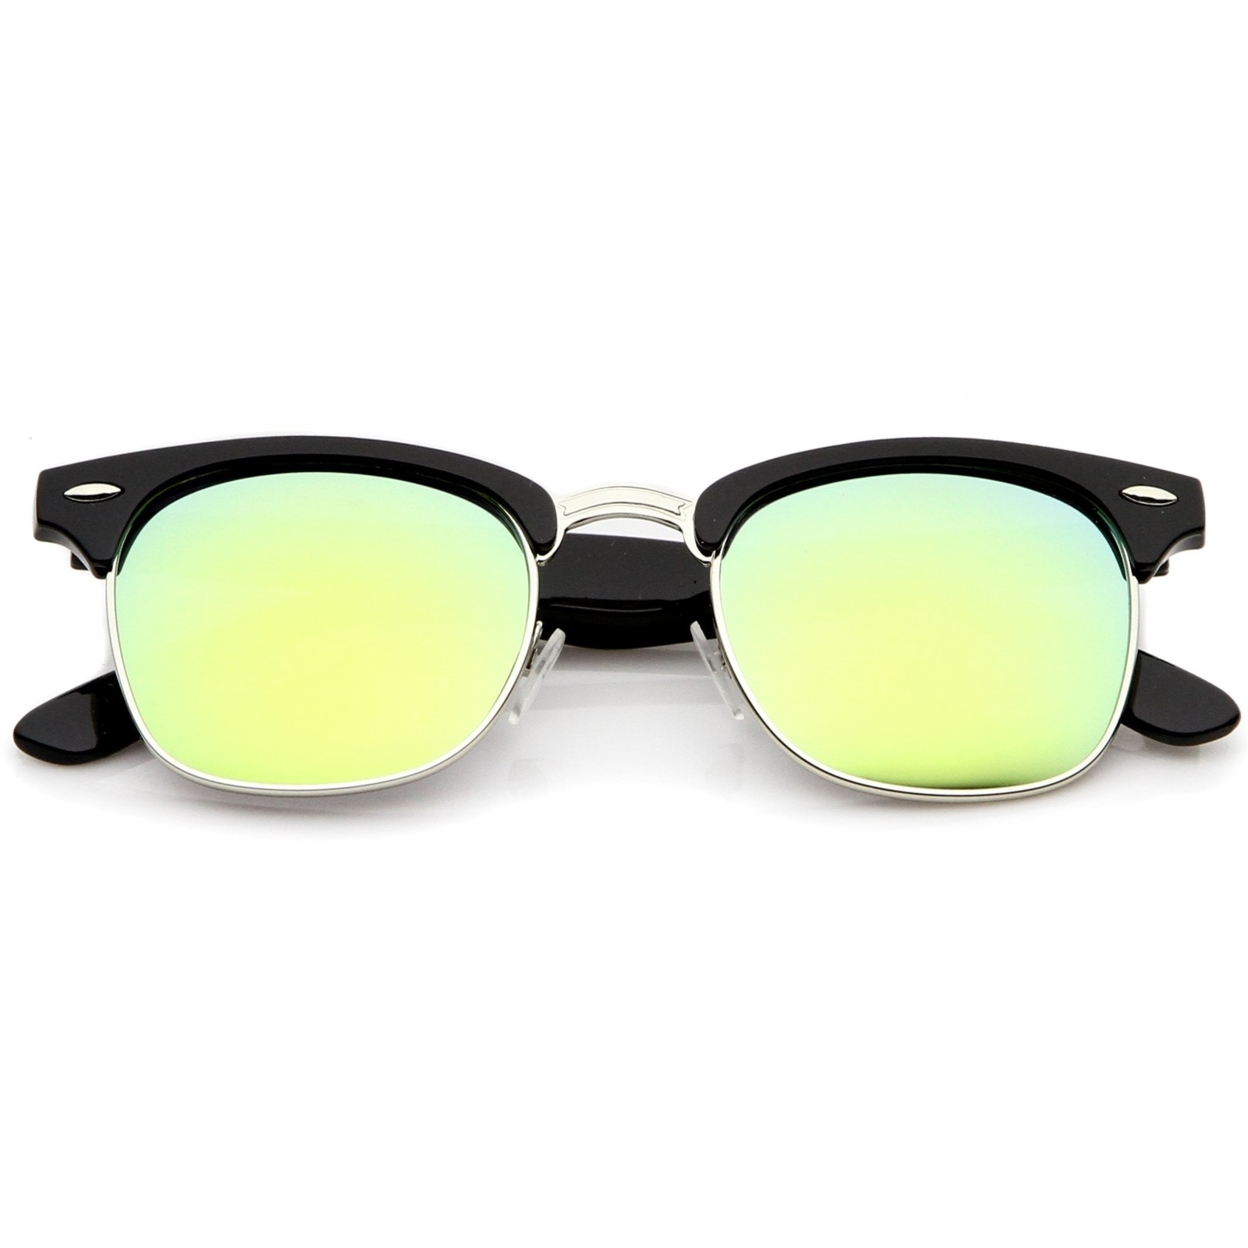 Premium Half Frame Colored Mirror Lens Horn Rimmed Sunglasses 50mm - Tortoise-Gold / Yellow Mirror